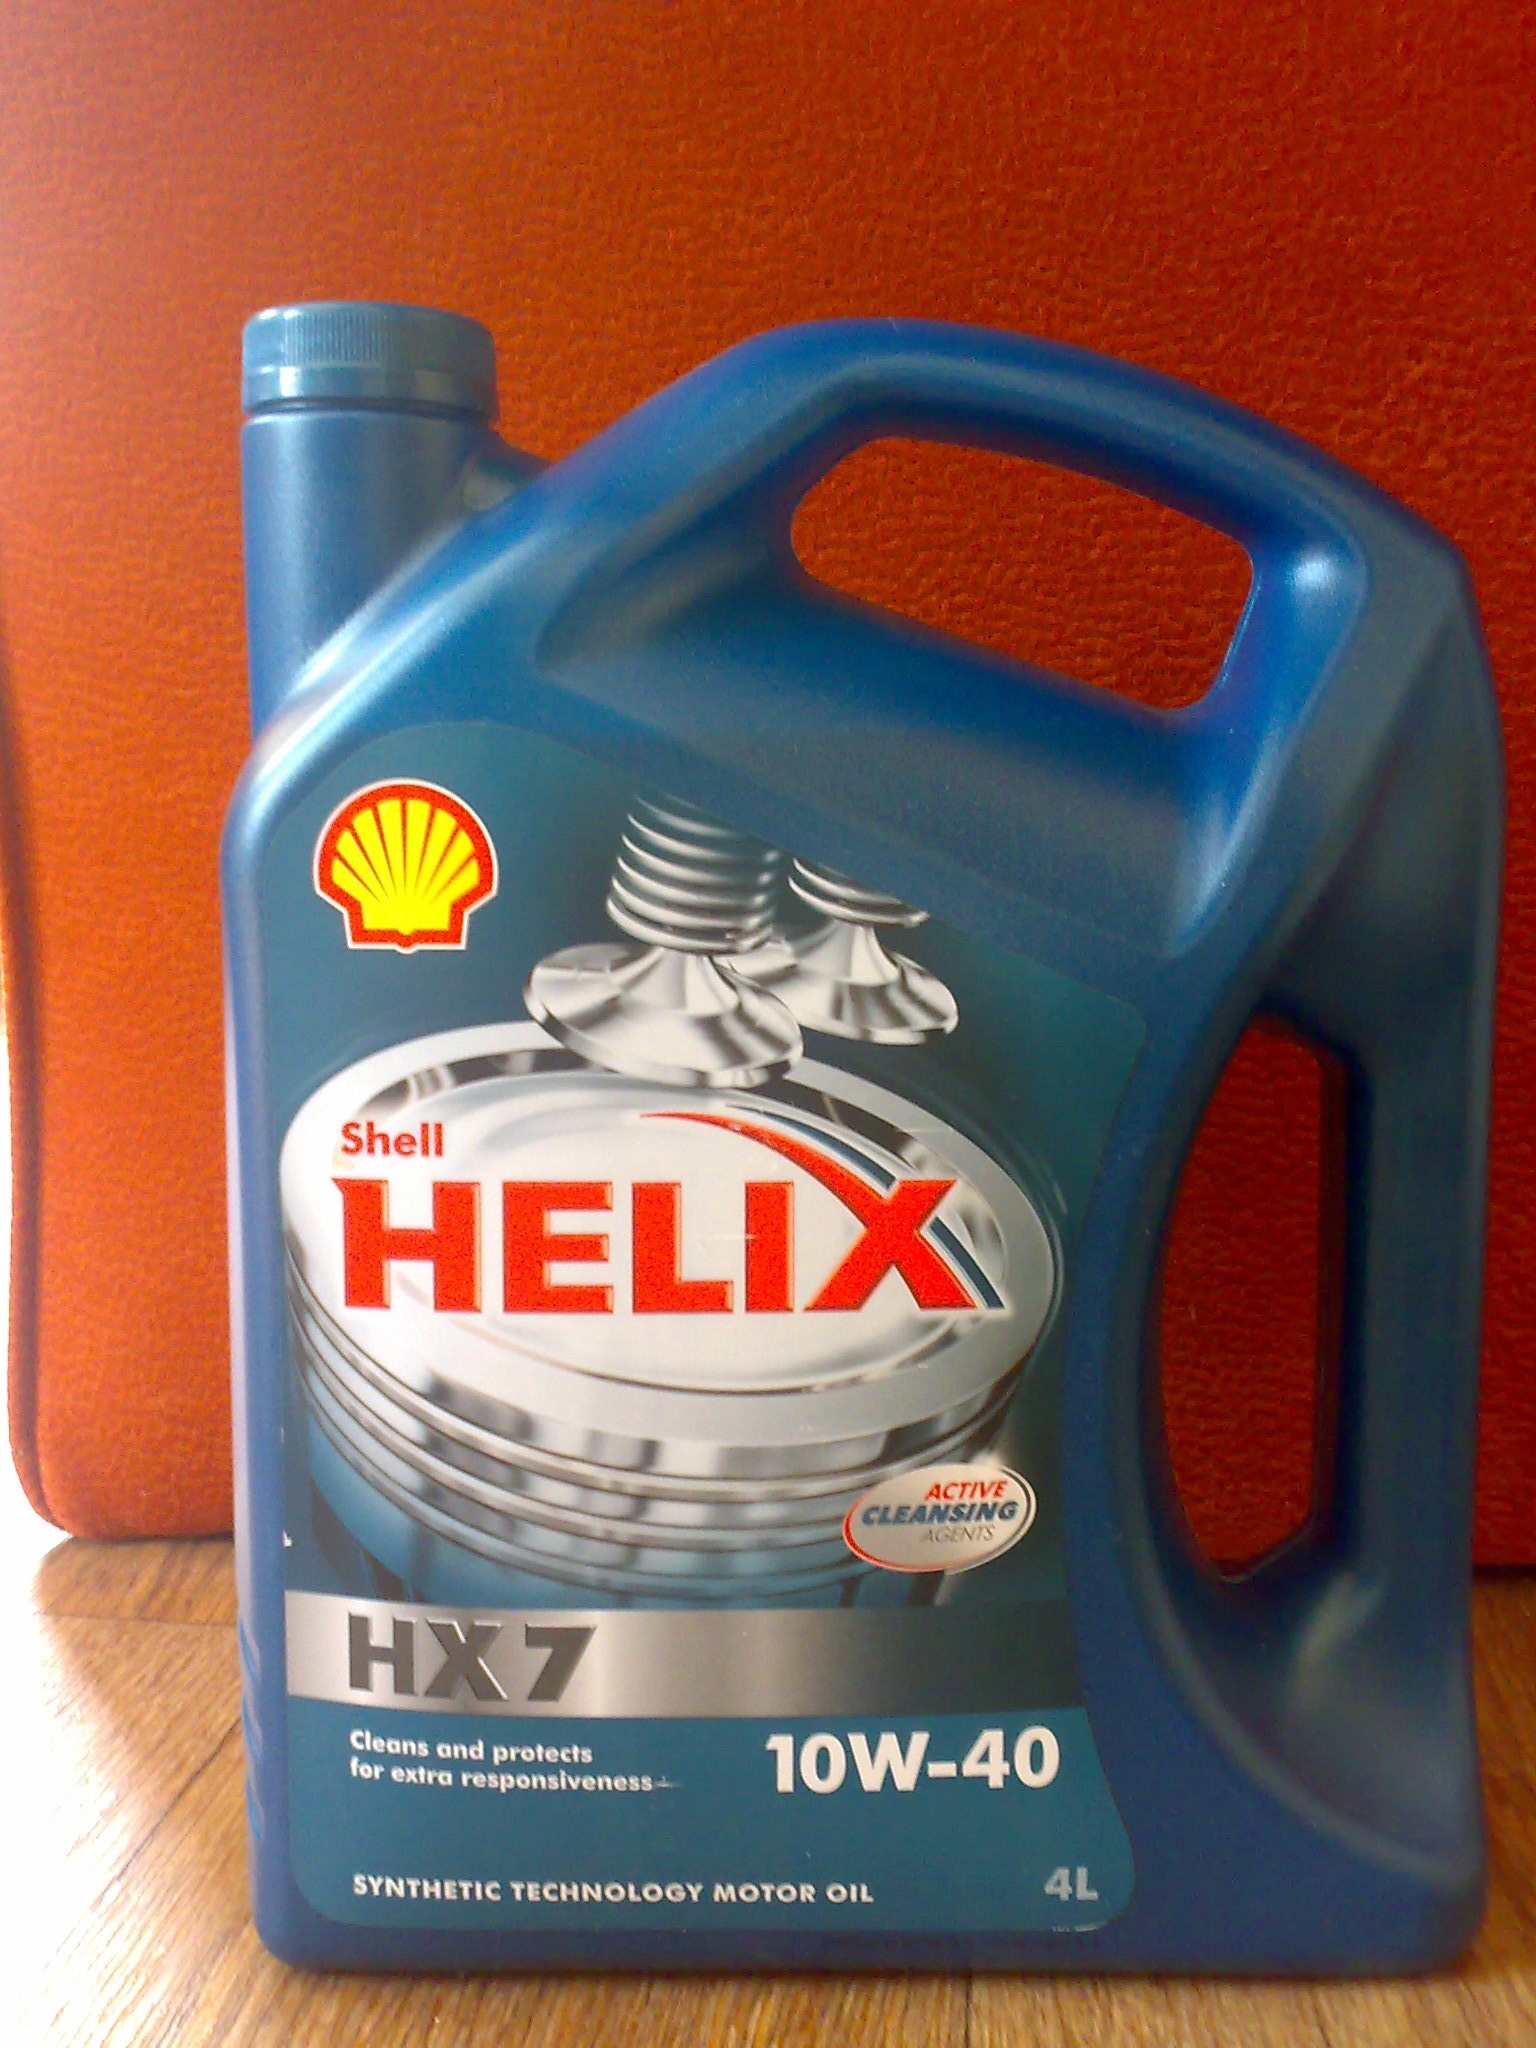 Масло shell 10w40. Shell hx7 10-40. Шелл Хеликс hx7 10w 40 полусинтетика. Масло Шелл 10w 40 полусинтетика. Масло Шелл Хеликс 10w 40 полусинтетика.